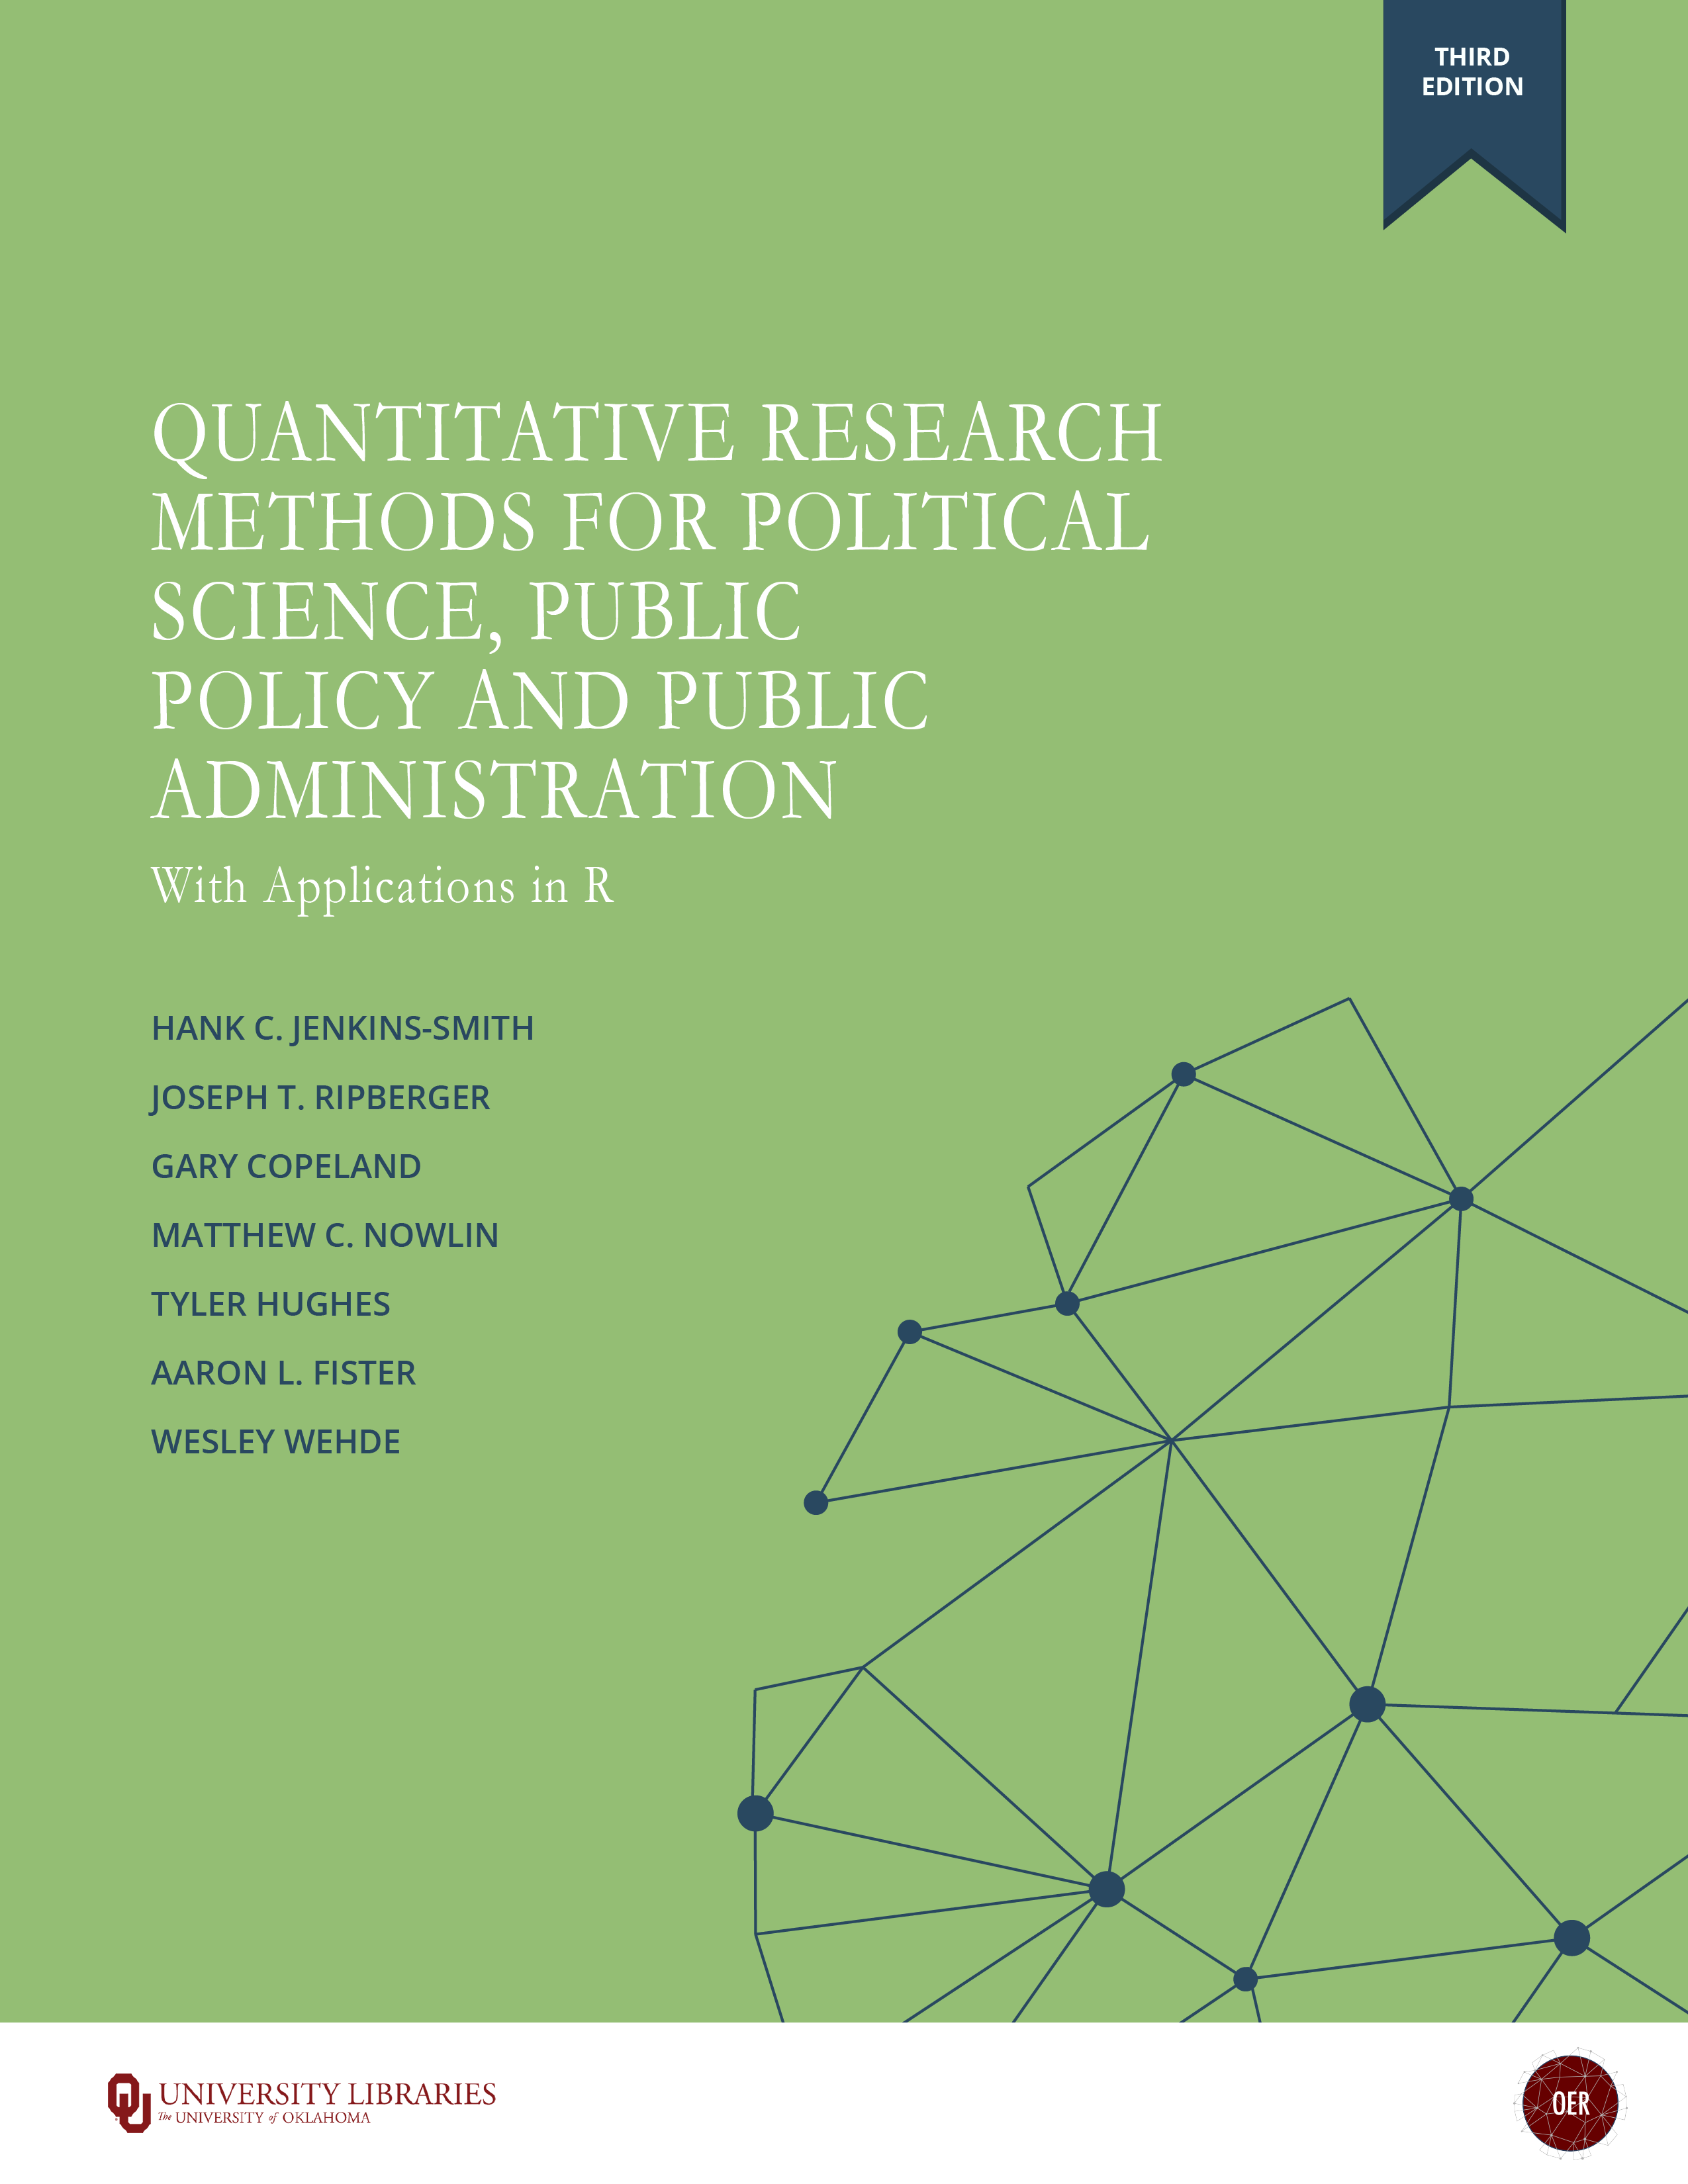 quantitative and qualitative research method in political science pdf